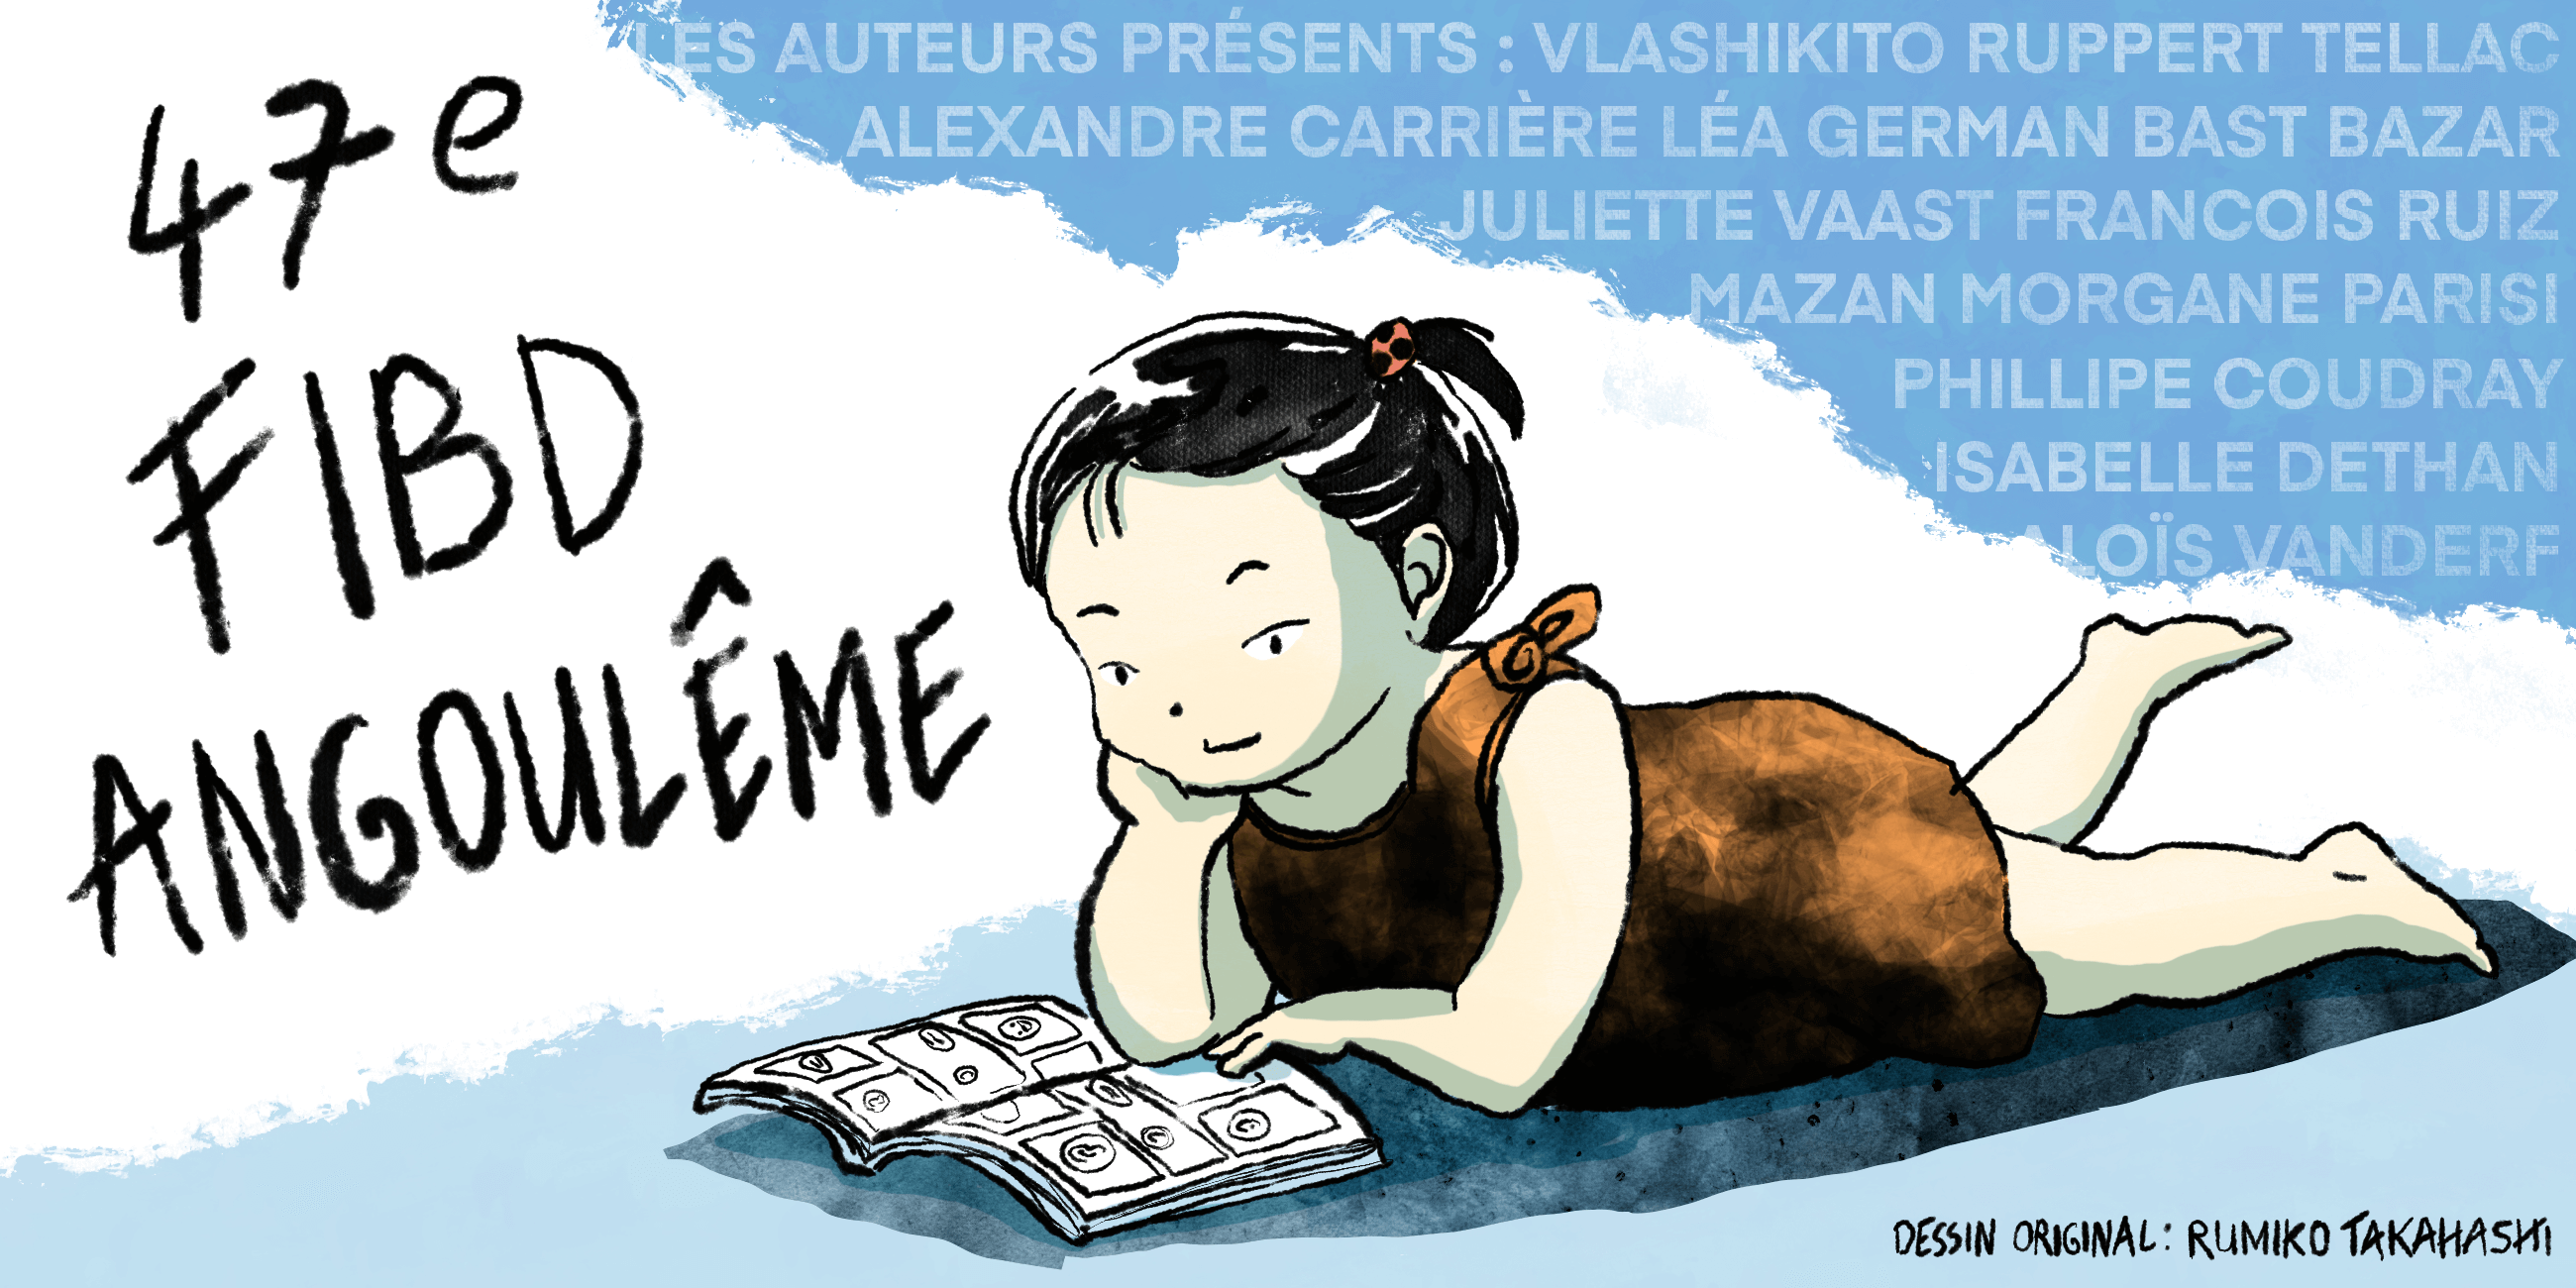 47th international comic book festival of Angoulême